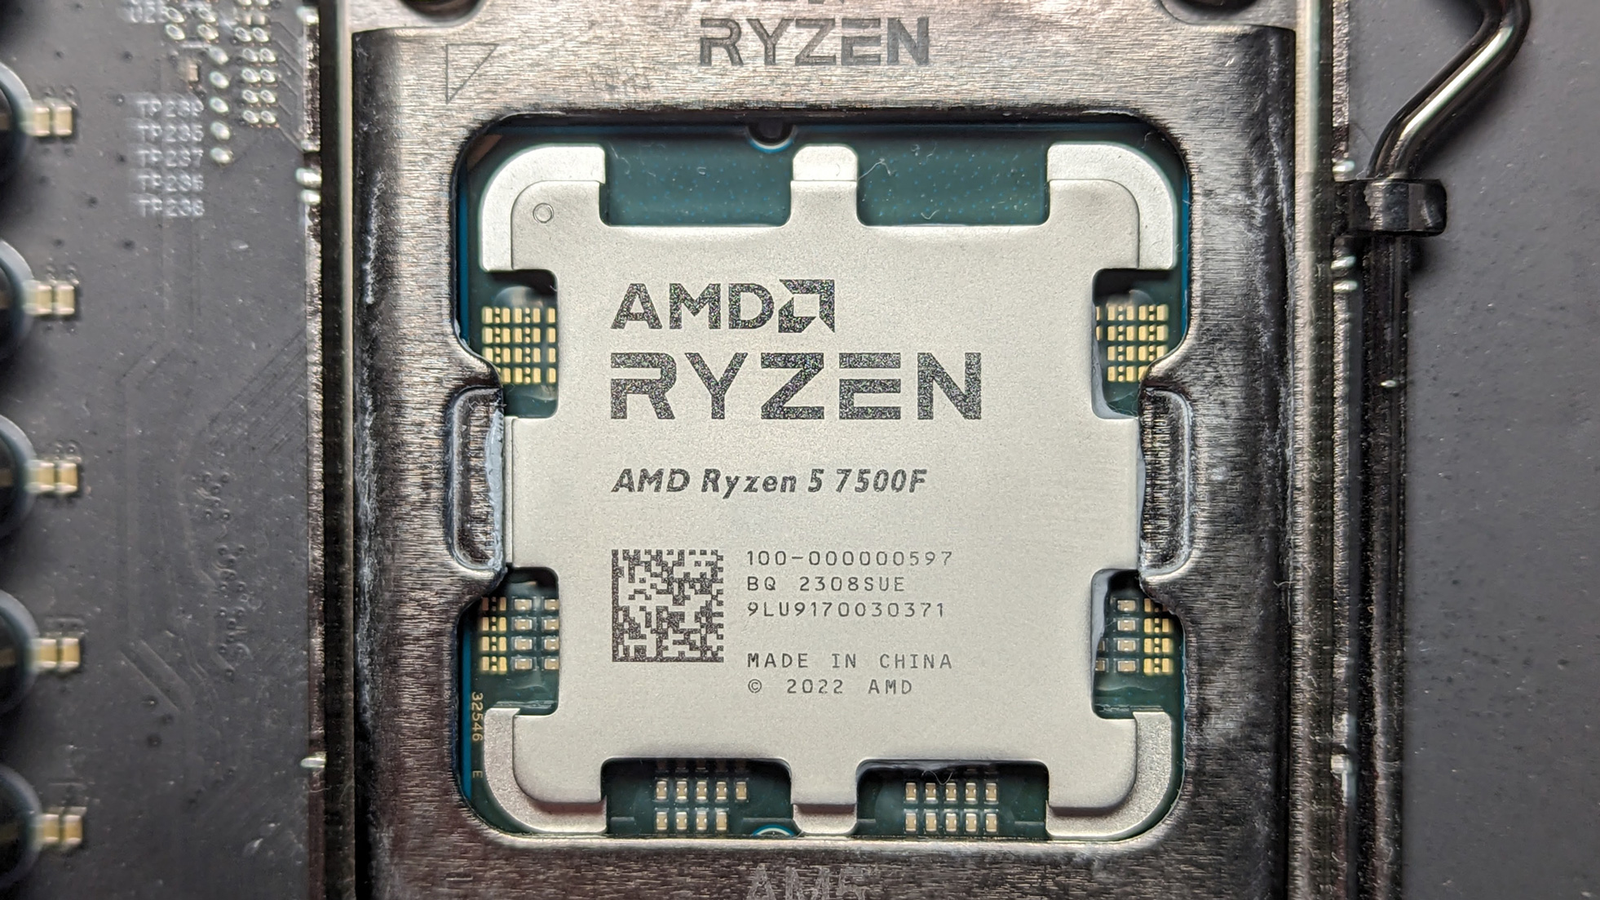 AMD Ryzen 9 7950X3D 4.2GHz Processor Silver